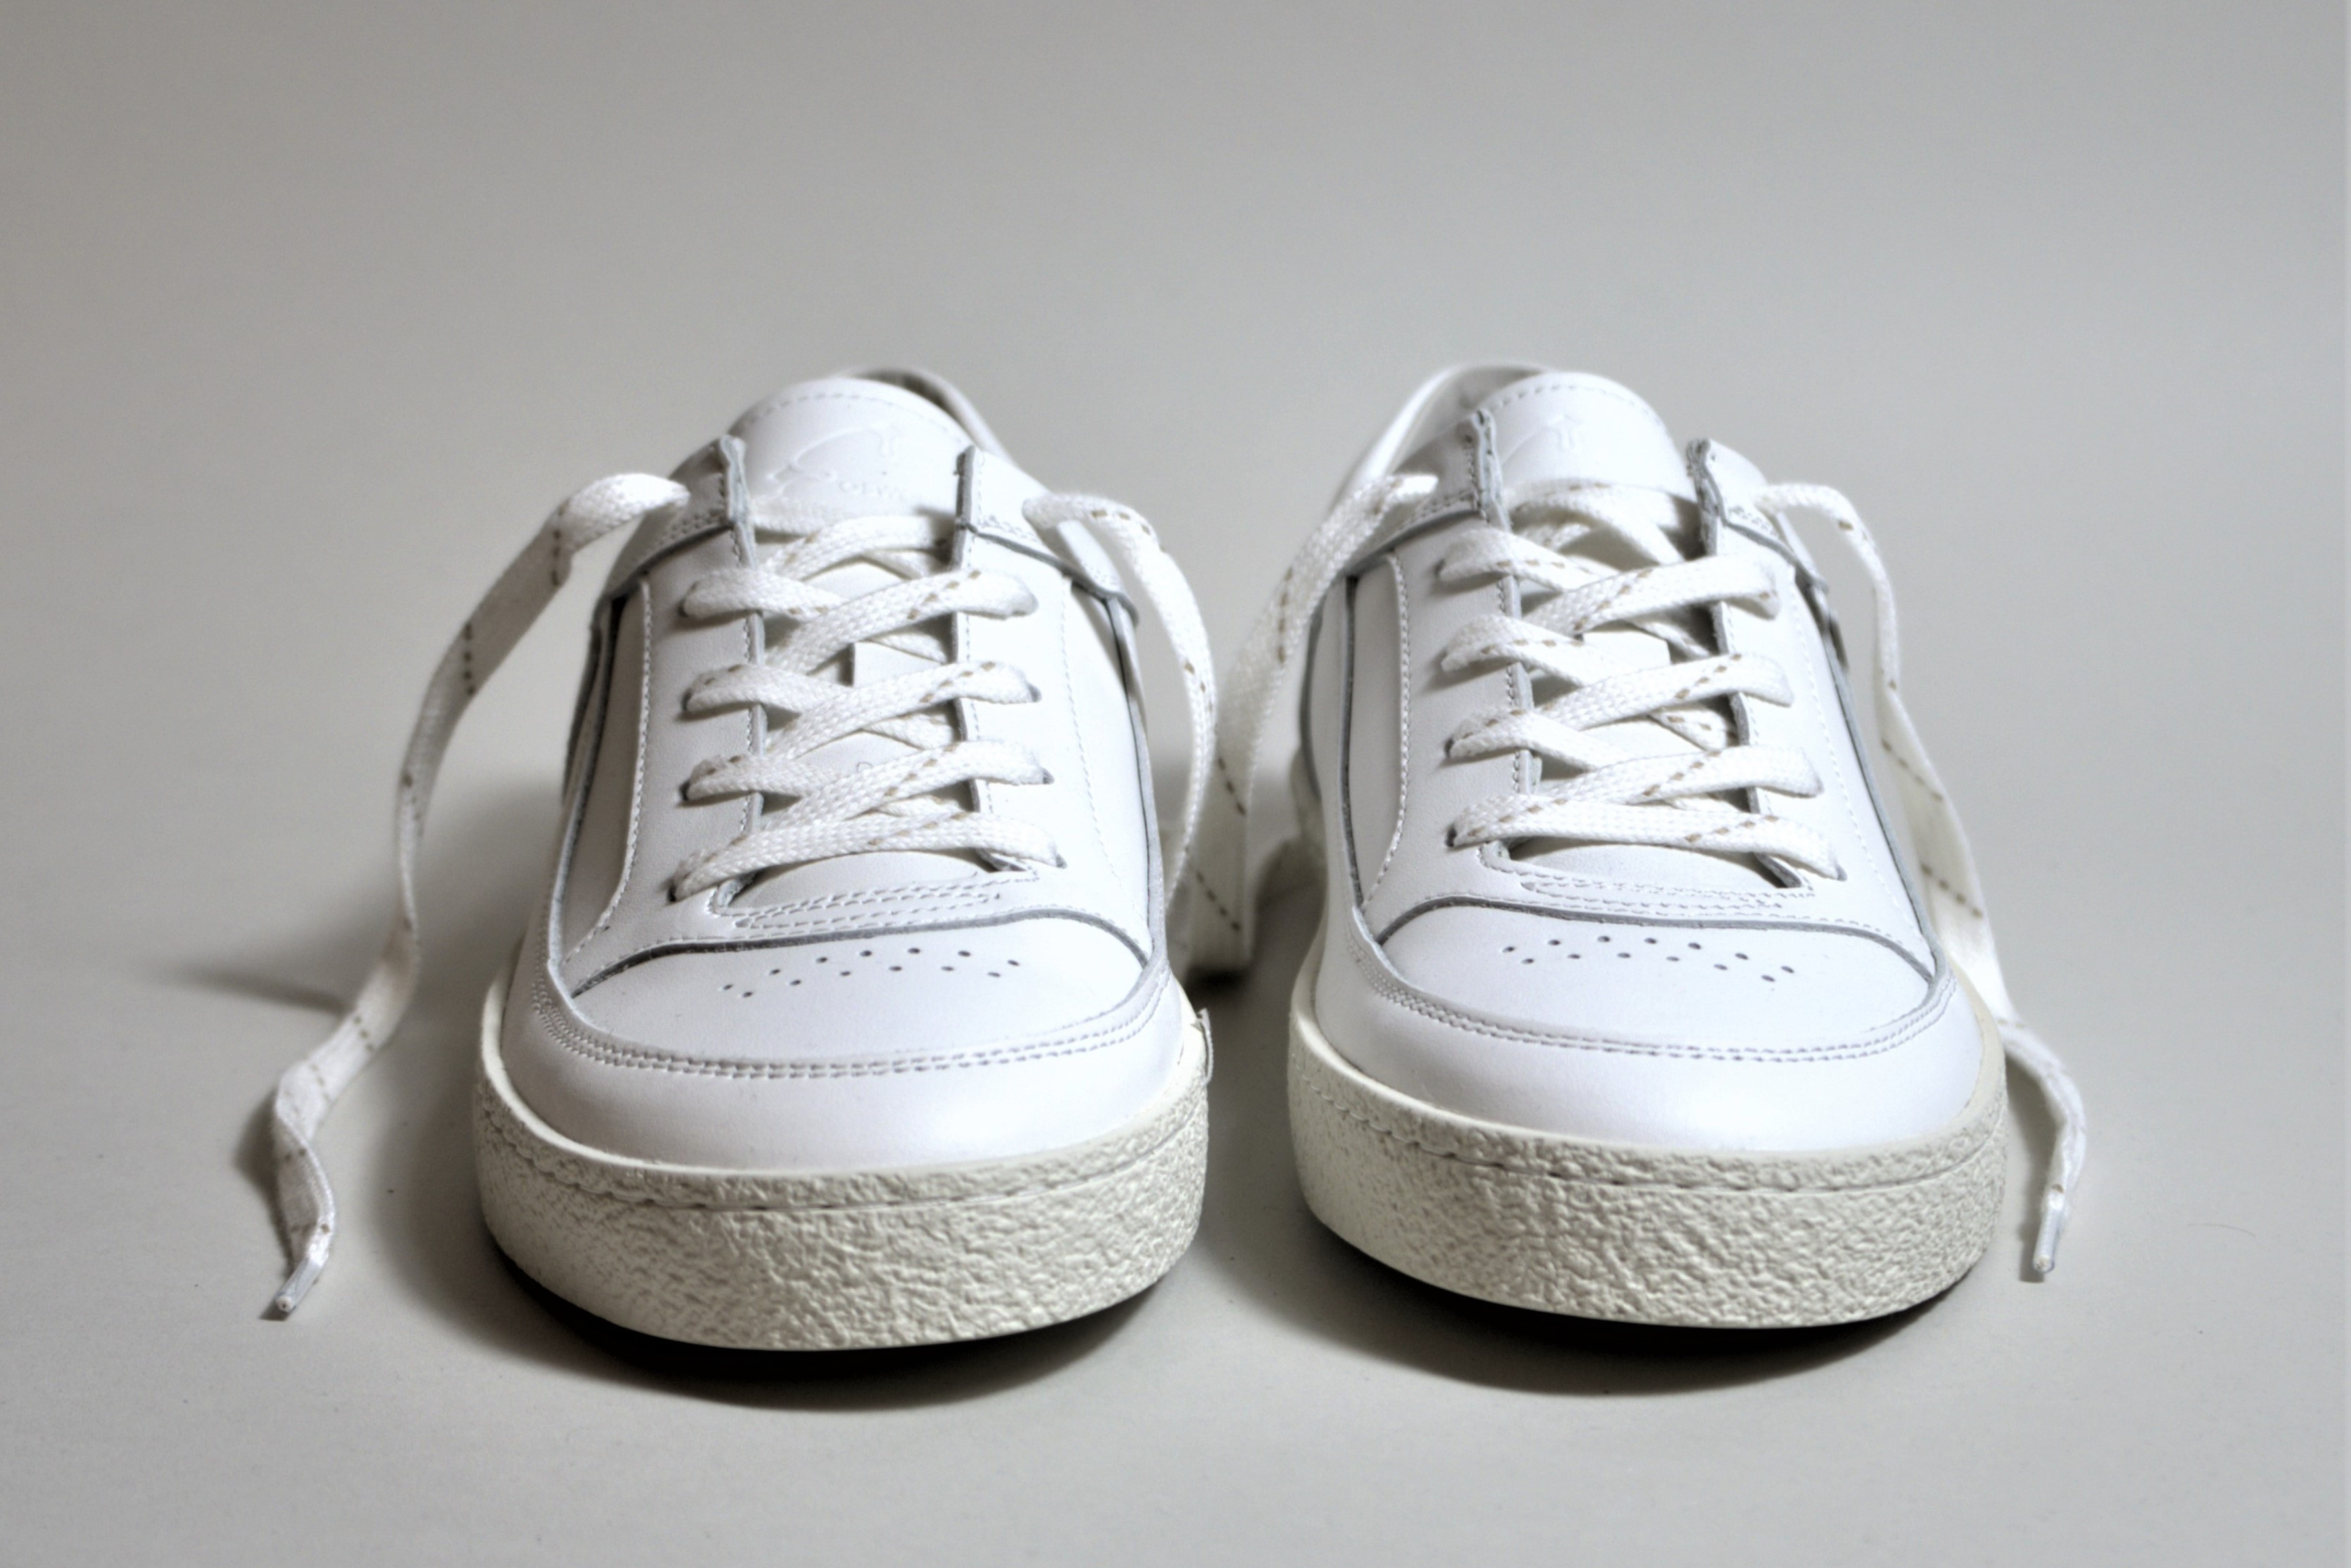 ELEVEN Sneaker OPTIC WHITE LEATHER